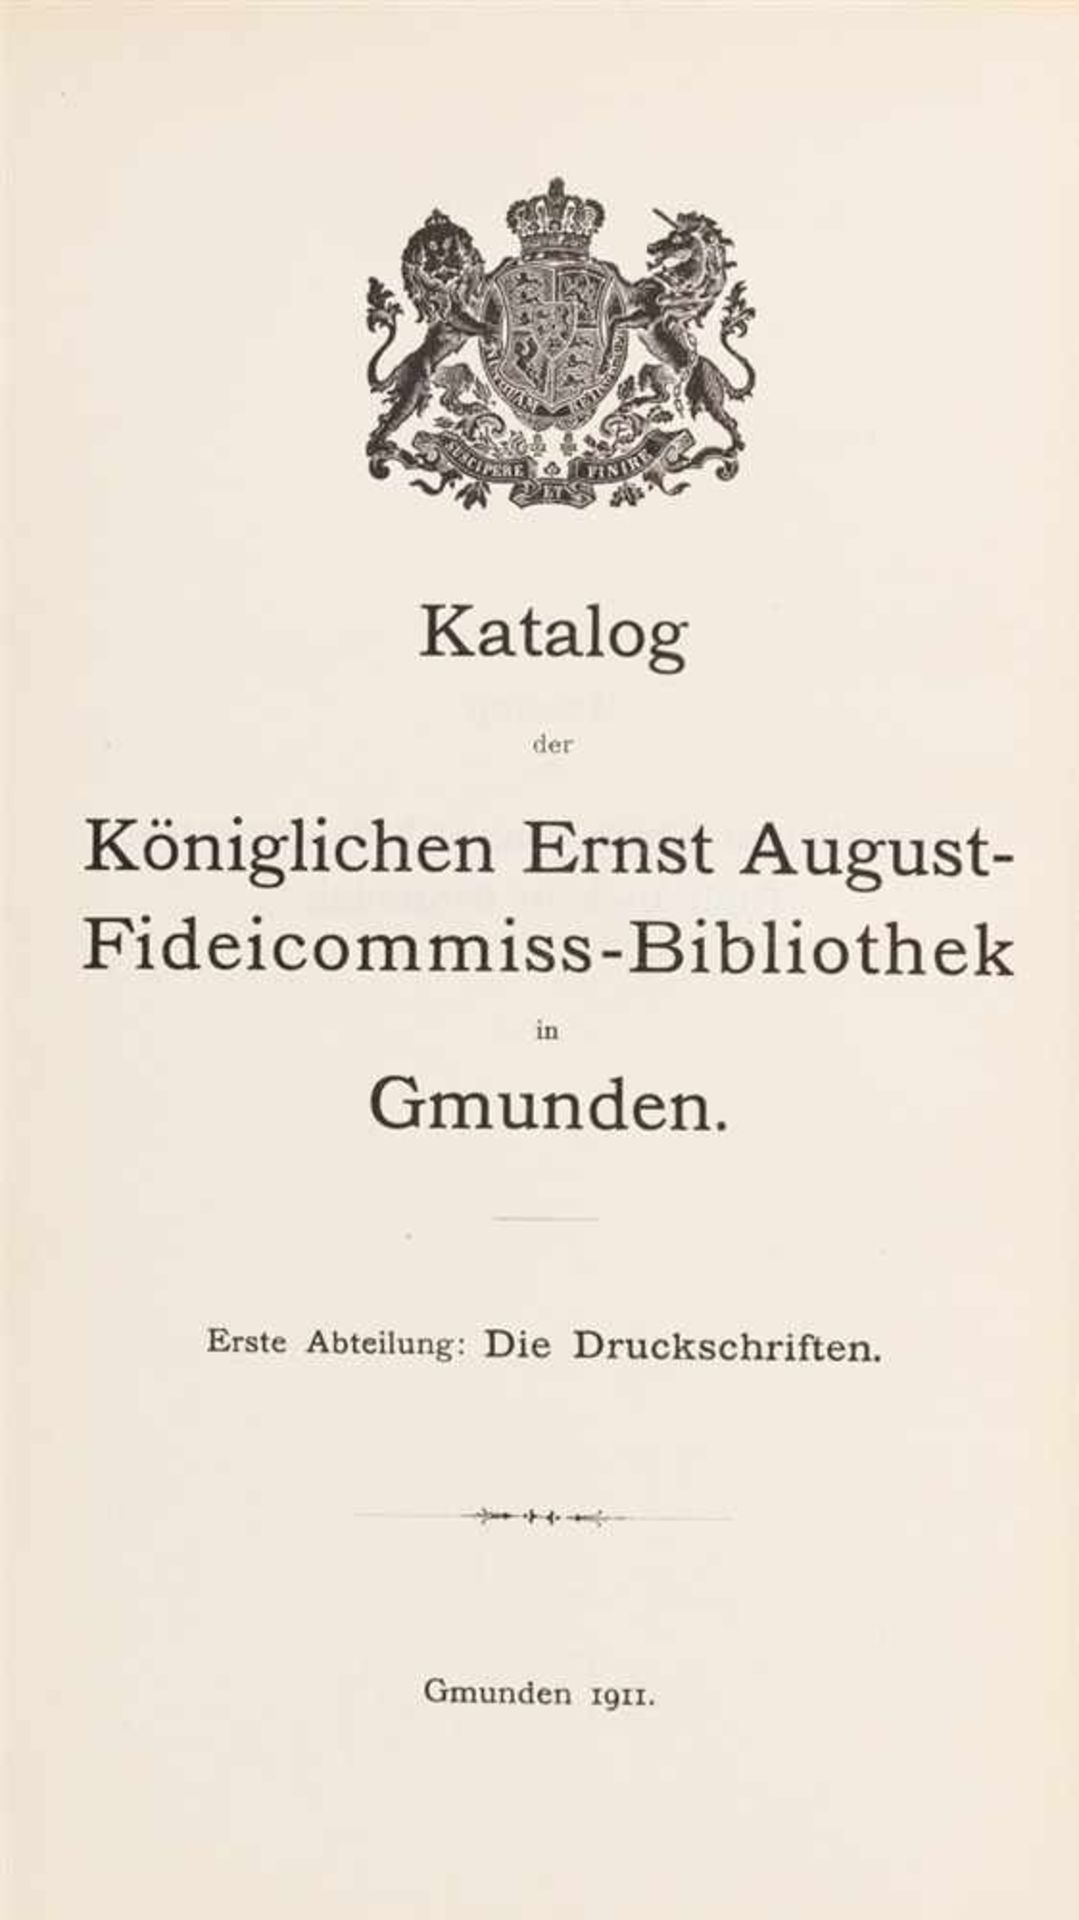 Ernst August Fideicommissbibliothek - Katalog der Königlichen Ernst August-Fideicommis-Bibliothek in